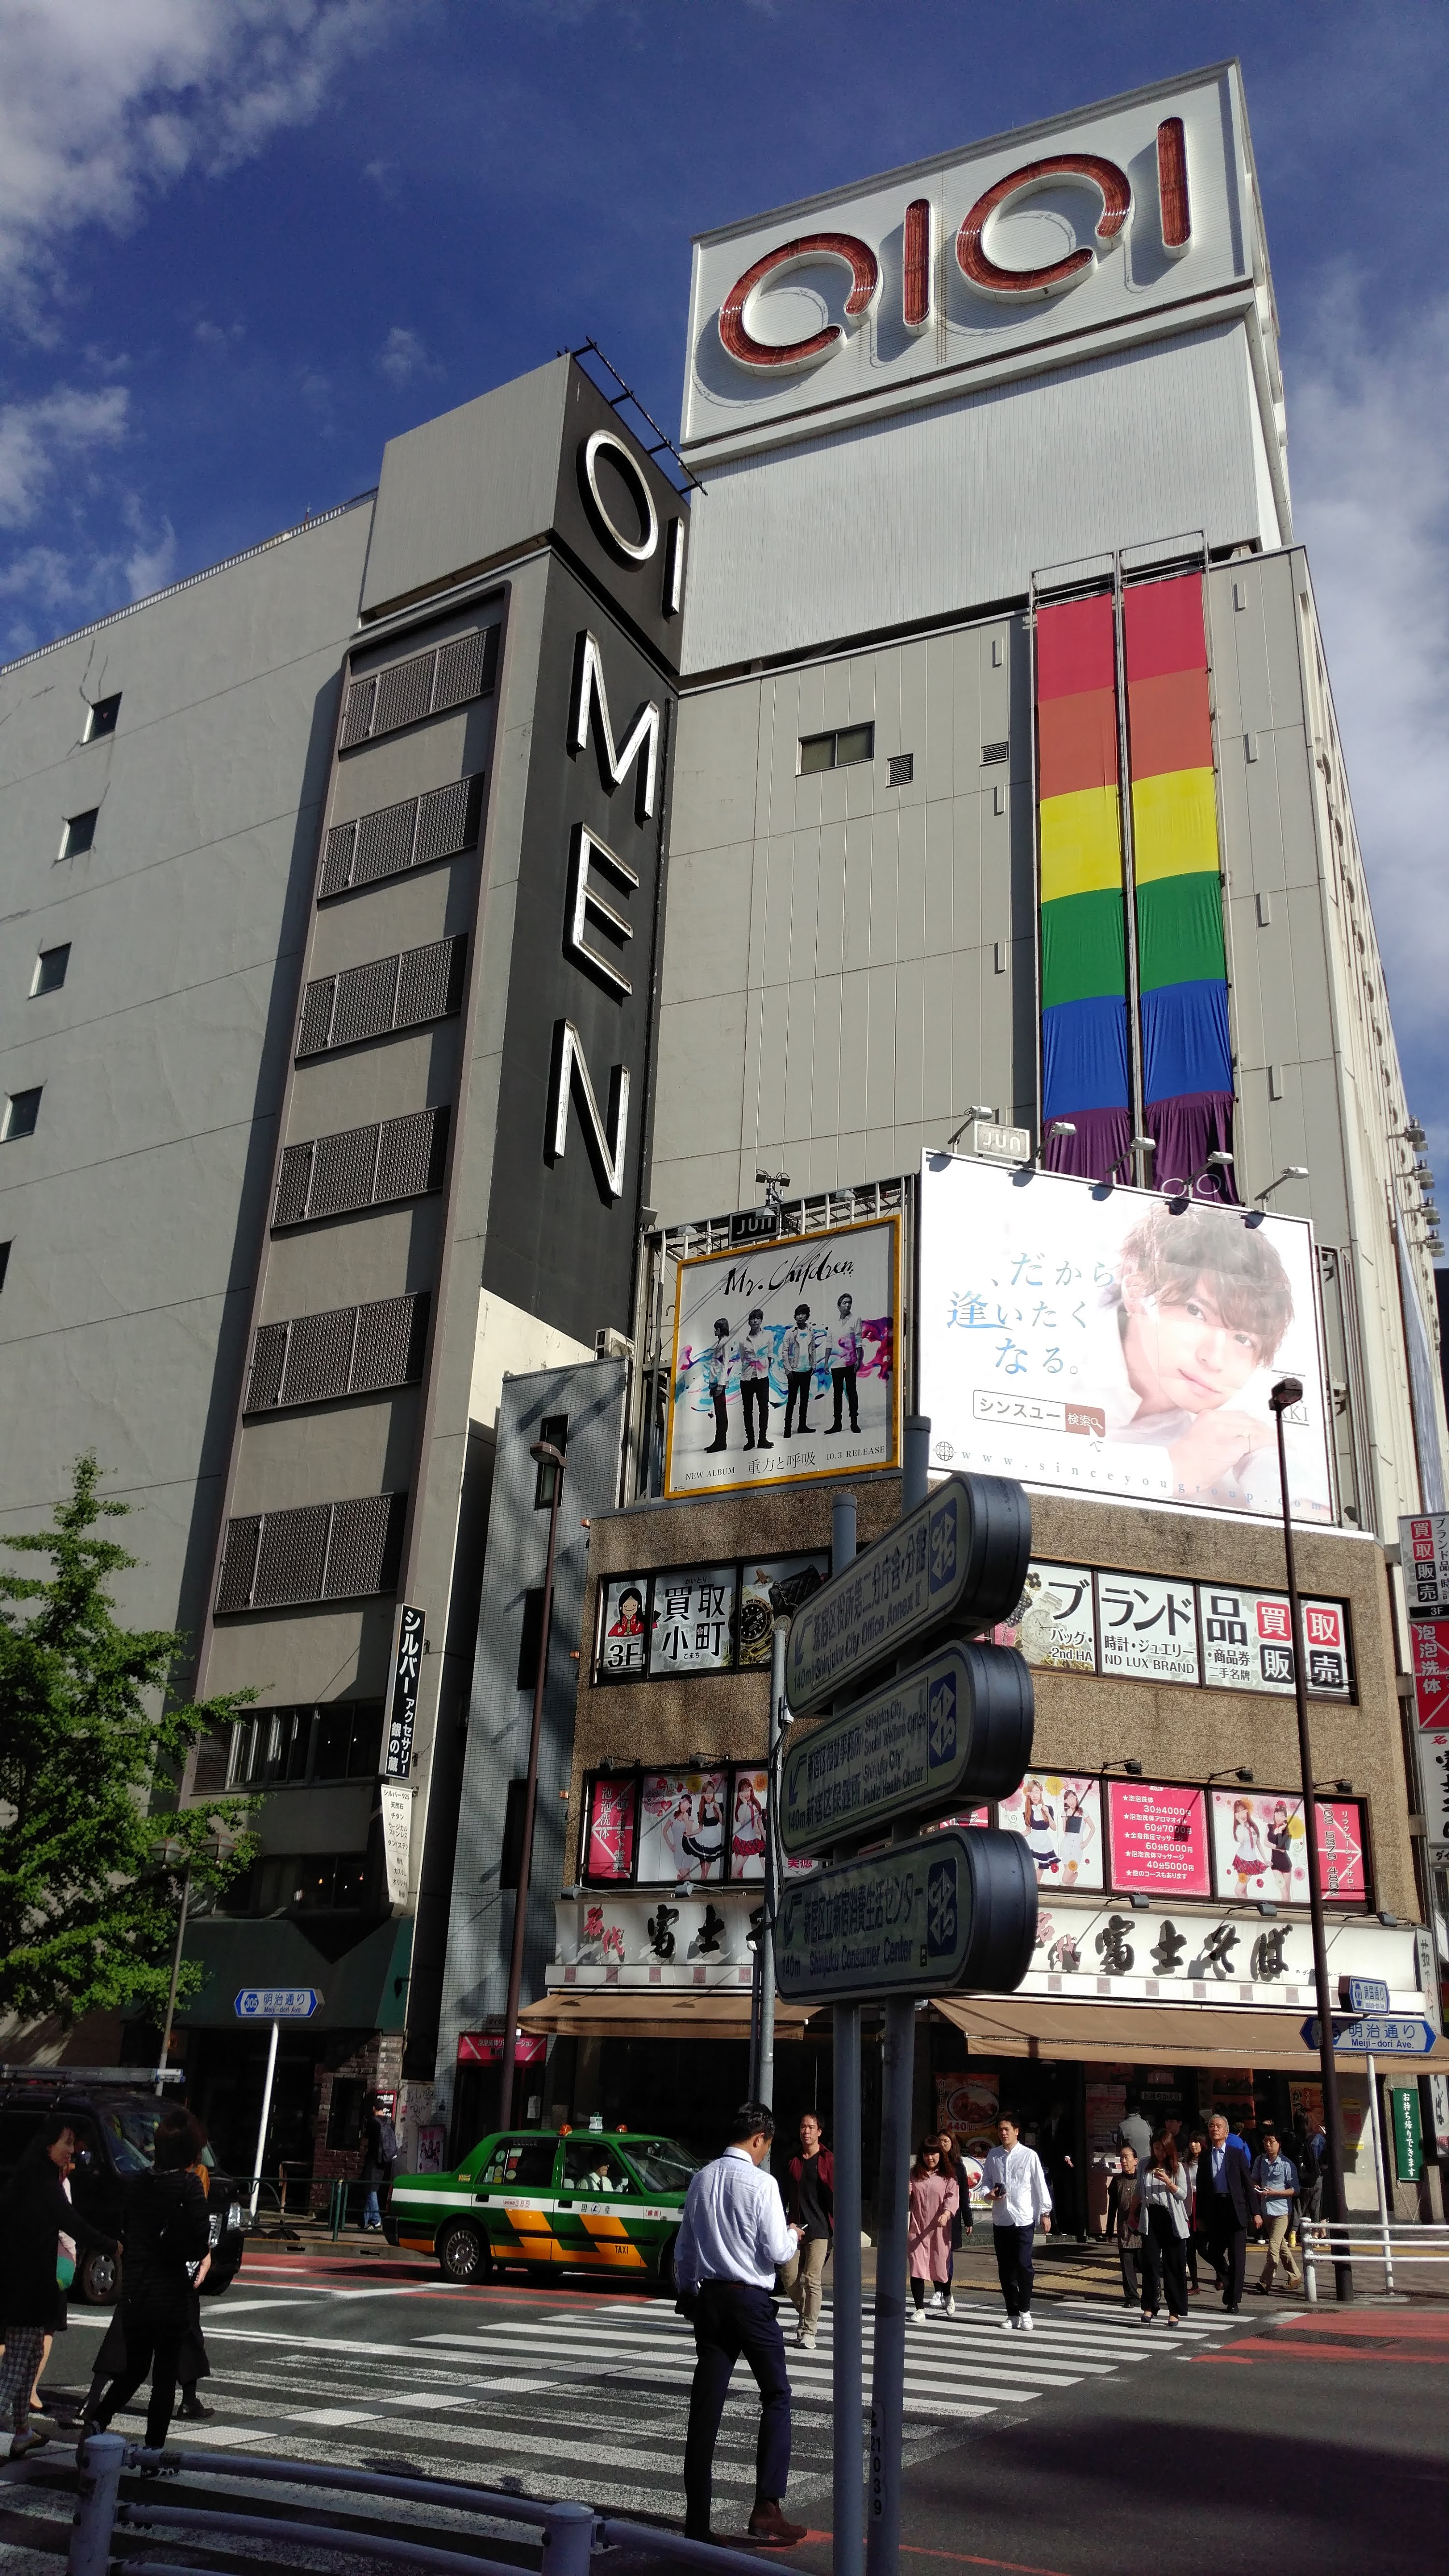 Shinjuku Marui Men building with large rainbow flag on the side